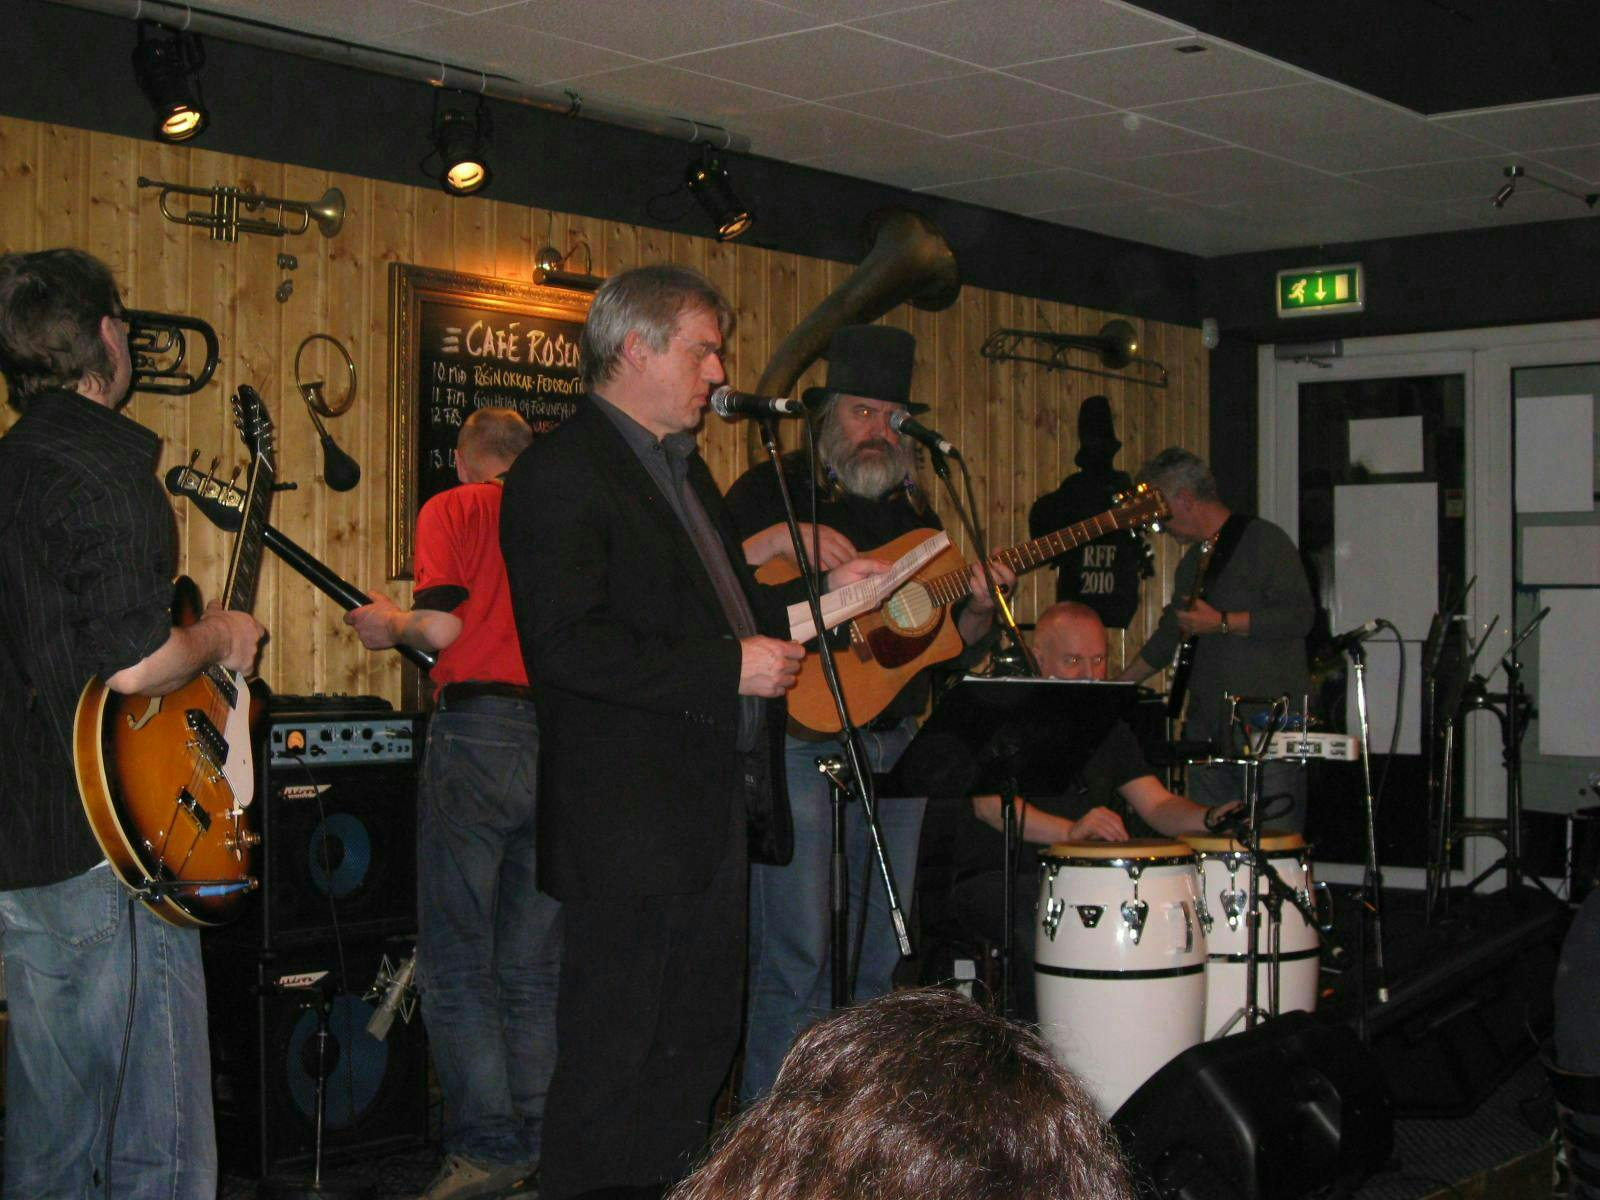 A folk band playing at Café Rosenberg, Reykjavik. 